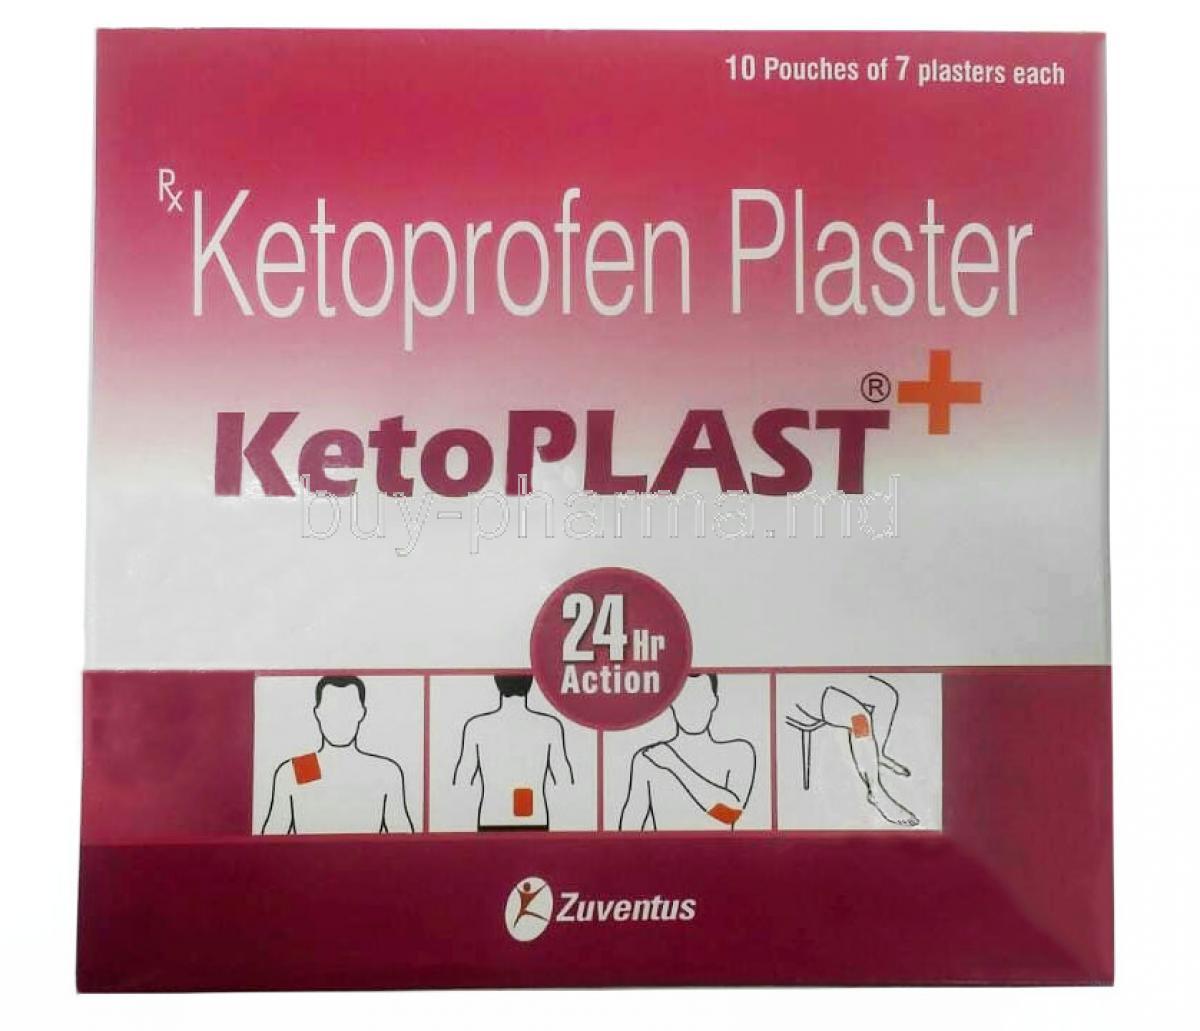 KetoPLAST Plus, Ketoprofen 30mg,Transdermal patch, Zuventus Healthcare, Box front view